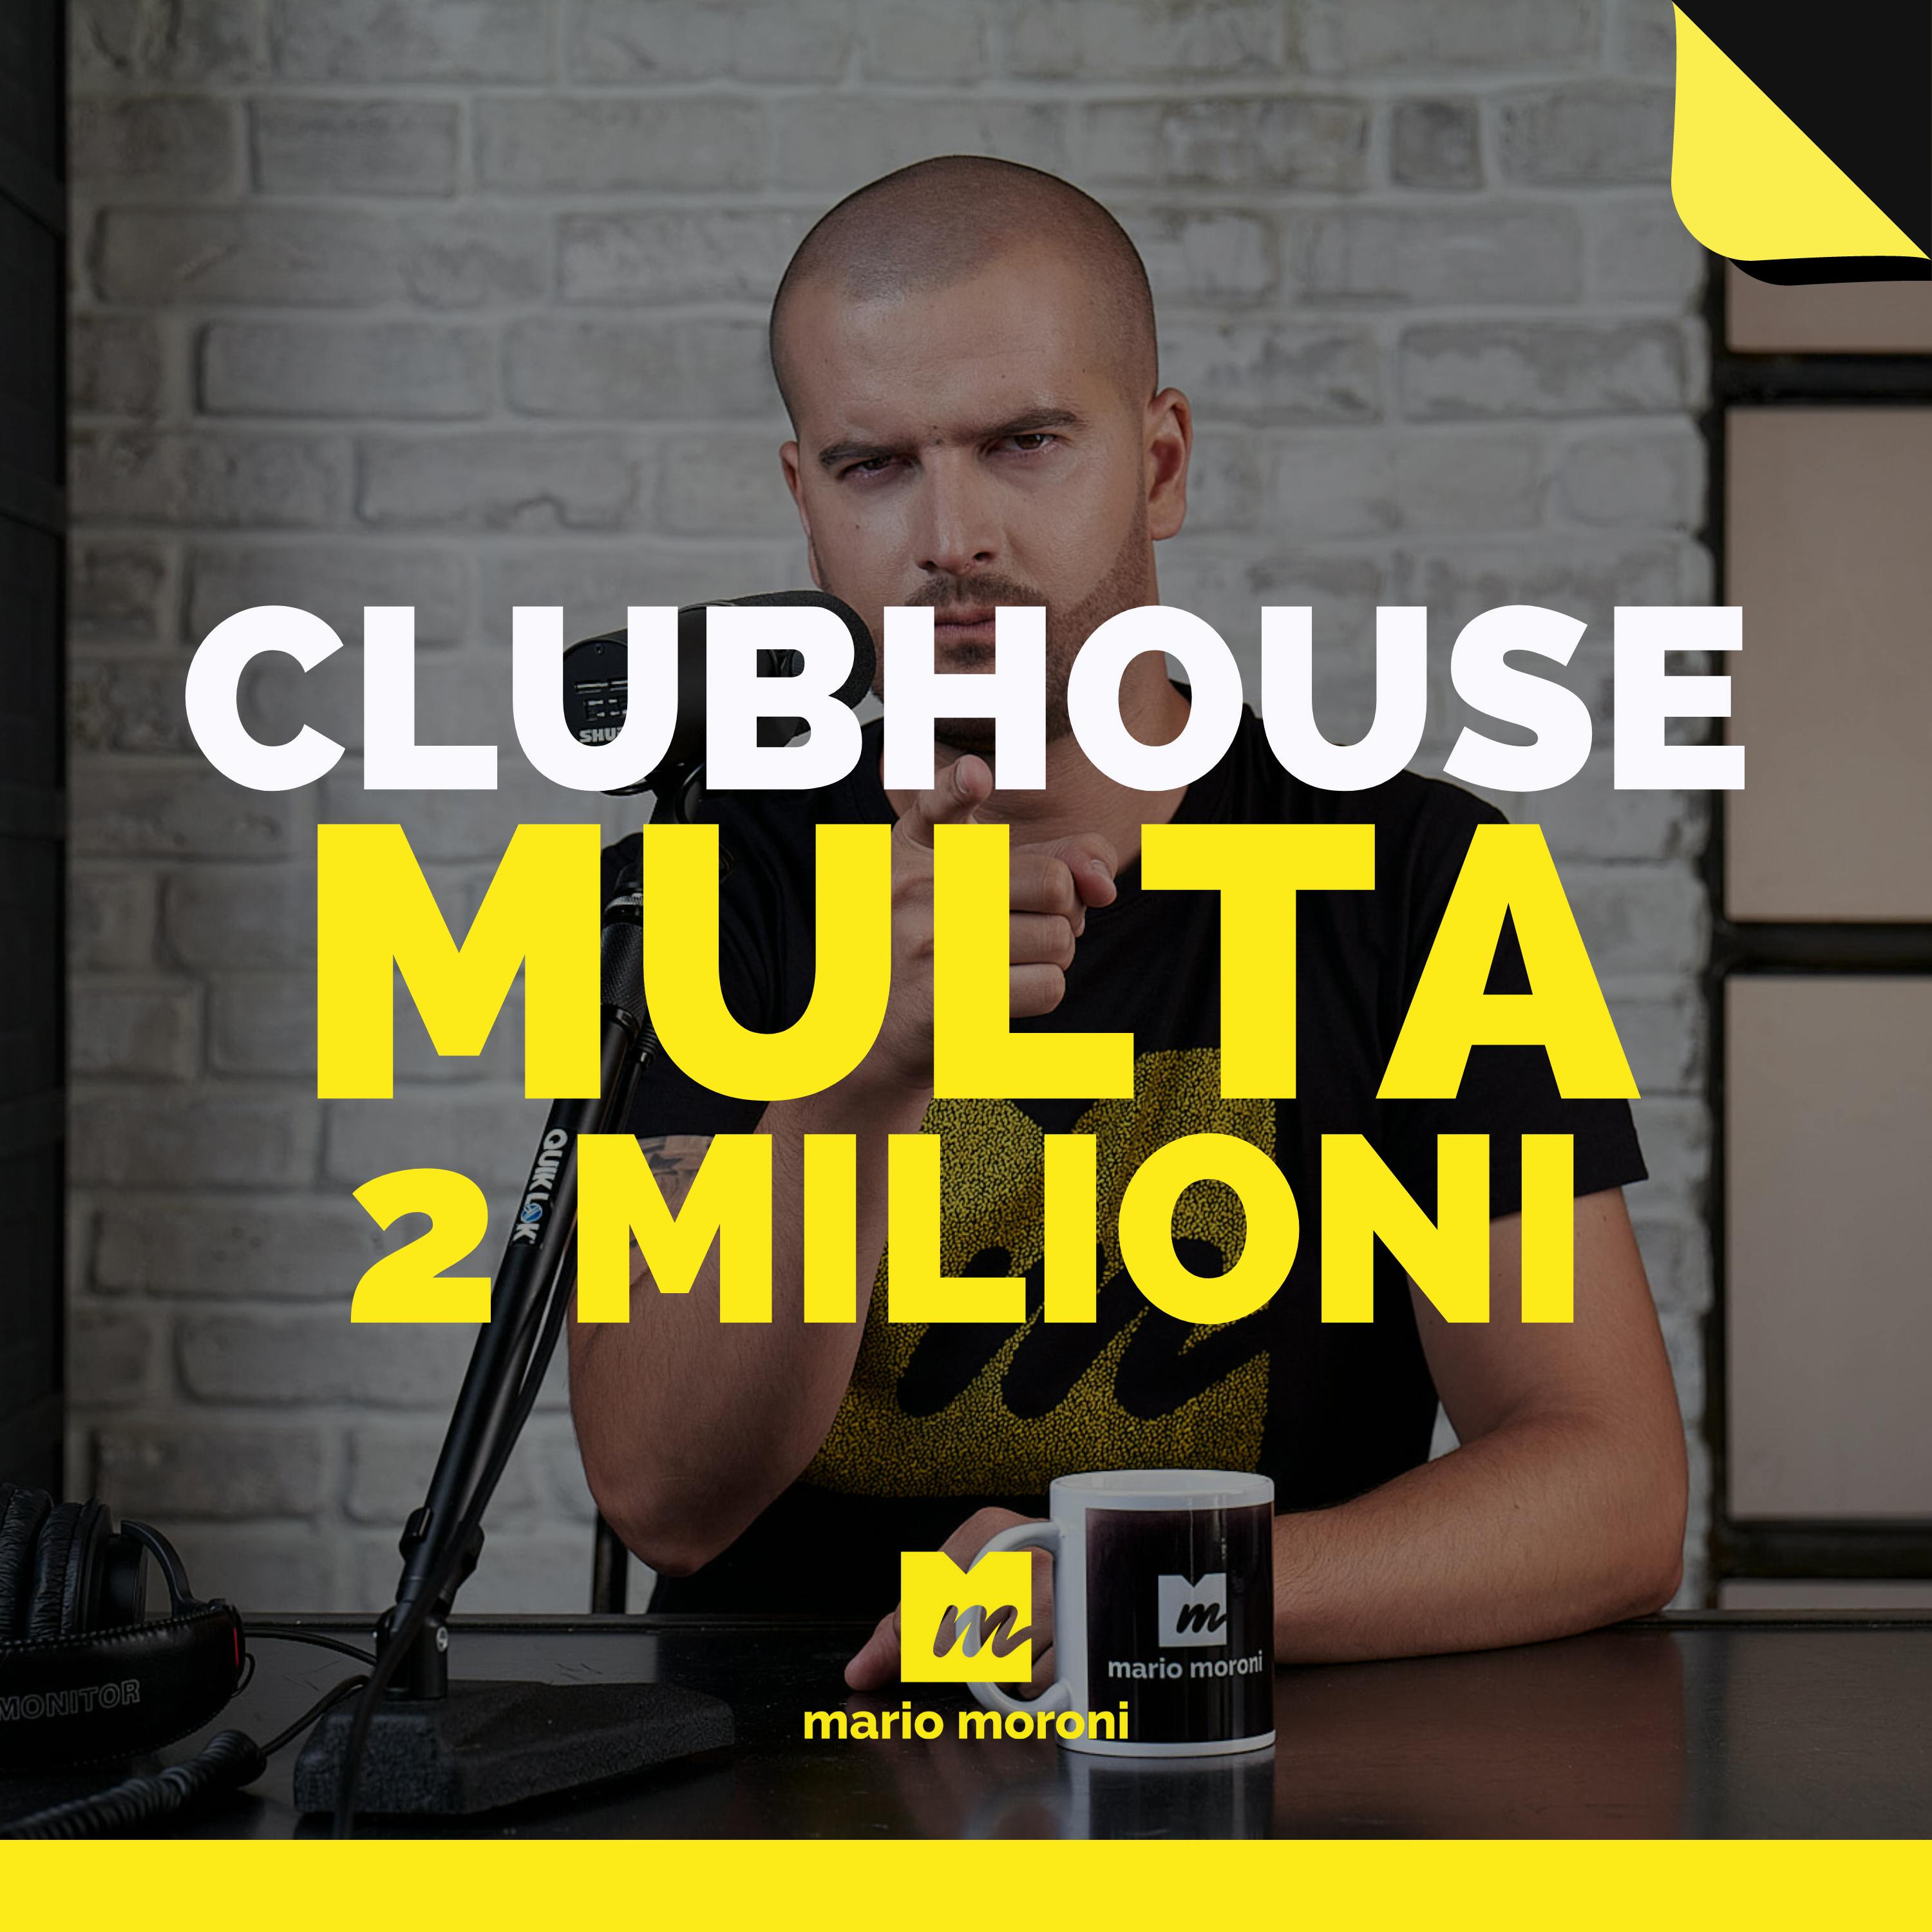 Clubhouse altra batosta: multa di 2 milioni dal Garante Privacy